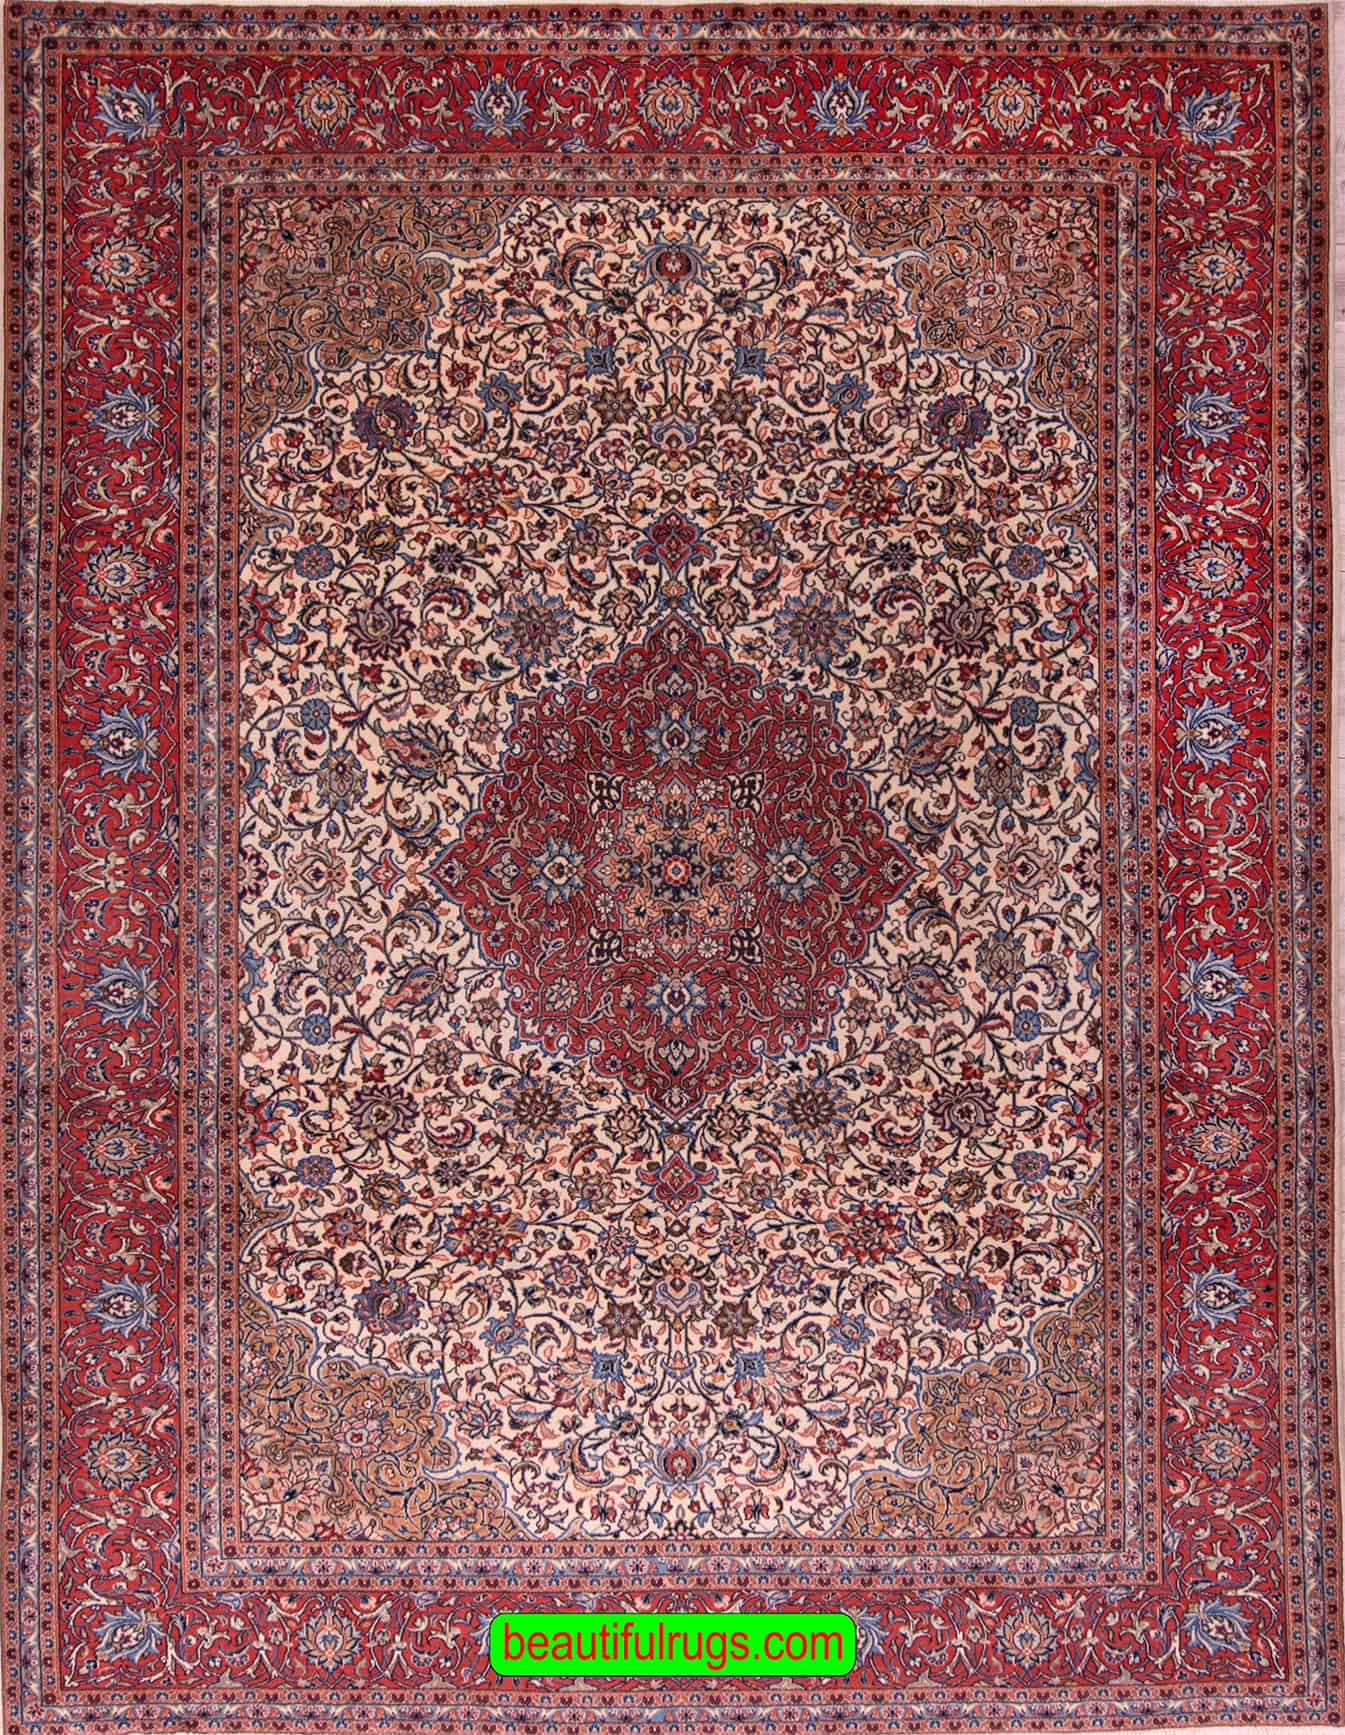 Traditional Persian Rug, Old Persian Sarouk Rug